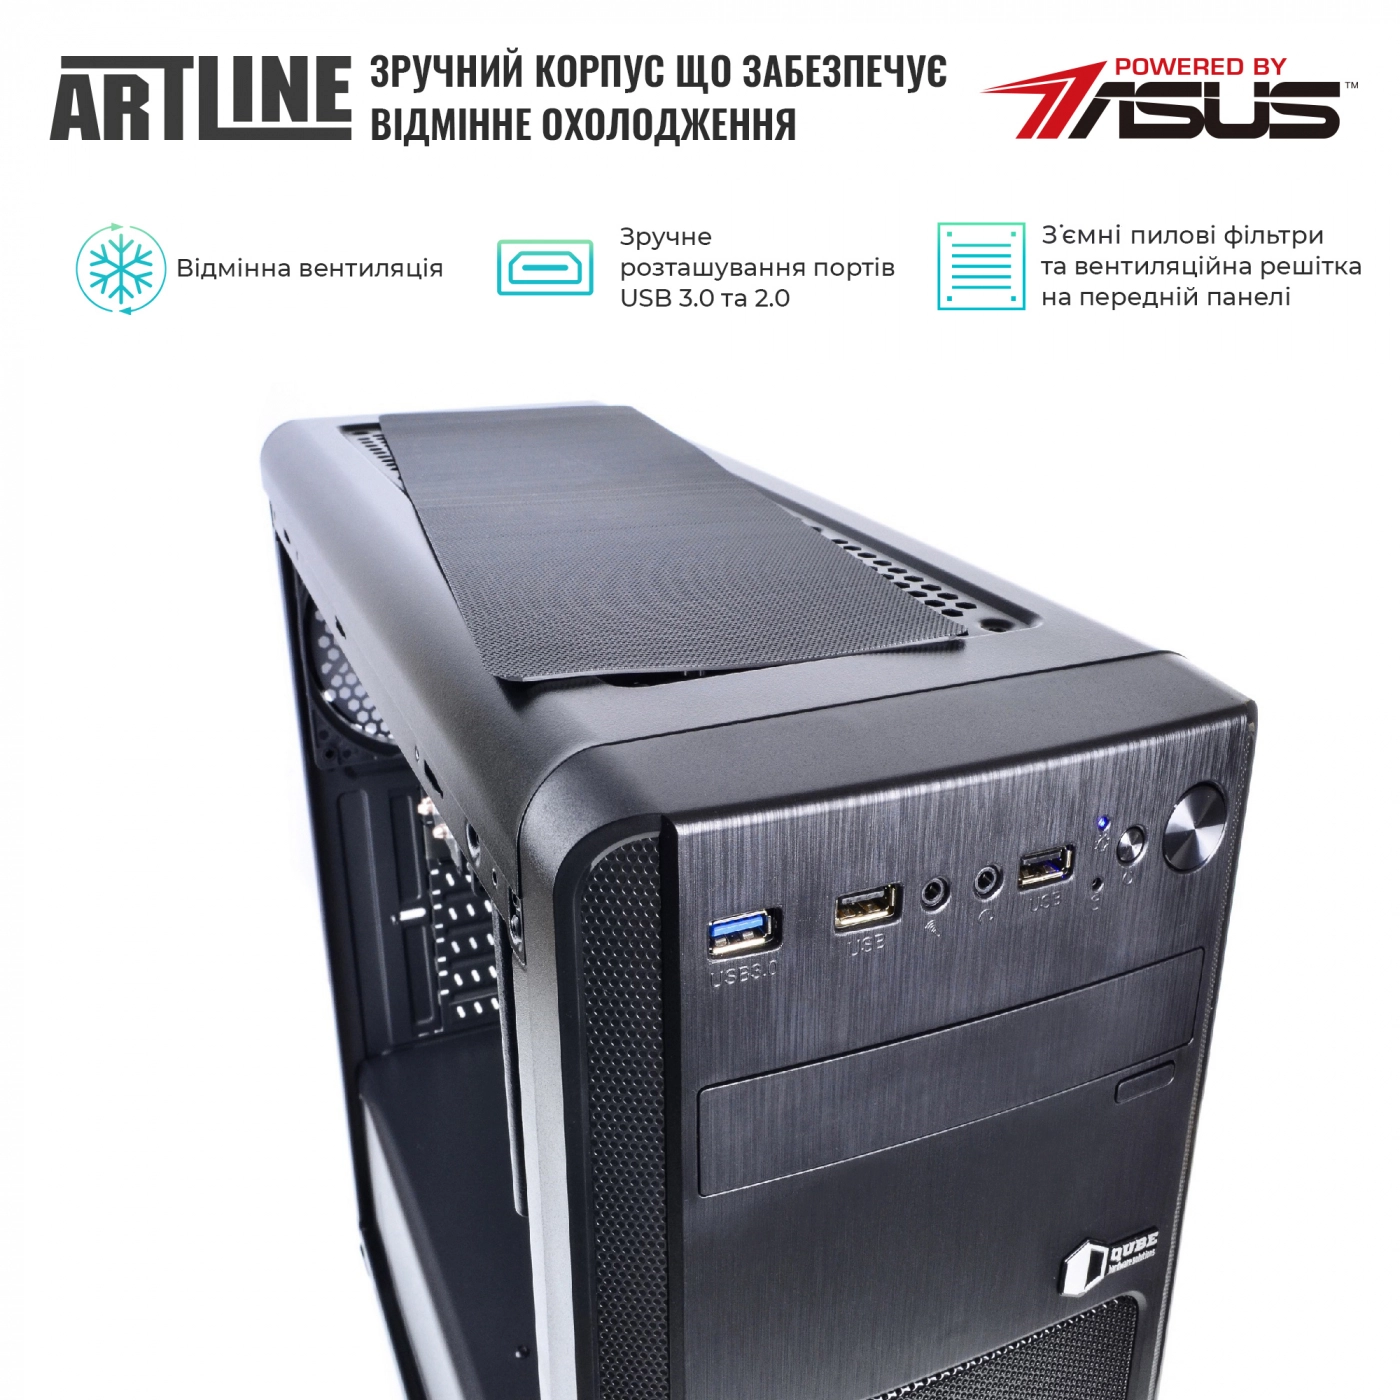 Купити Сервер ARTLINE Business T25v33 - фото 4